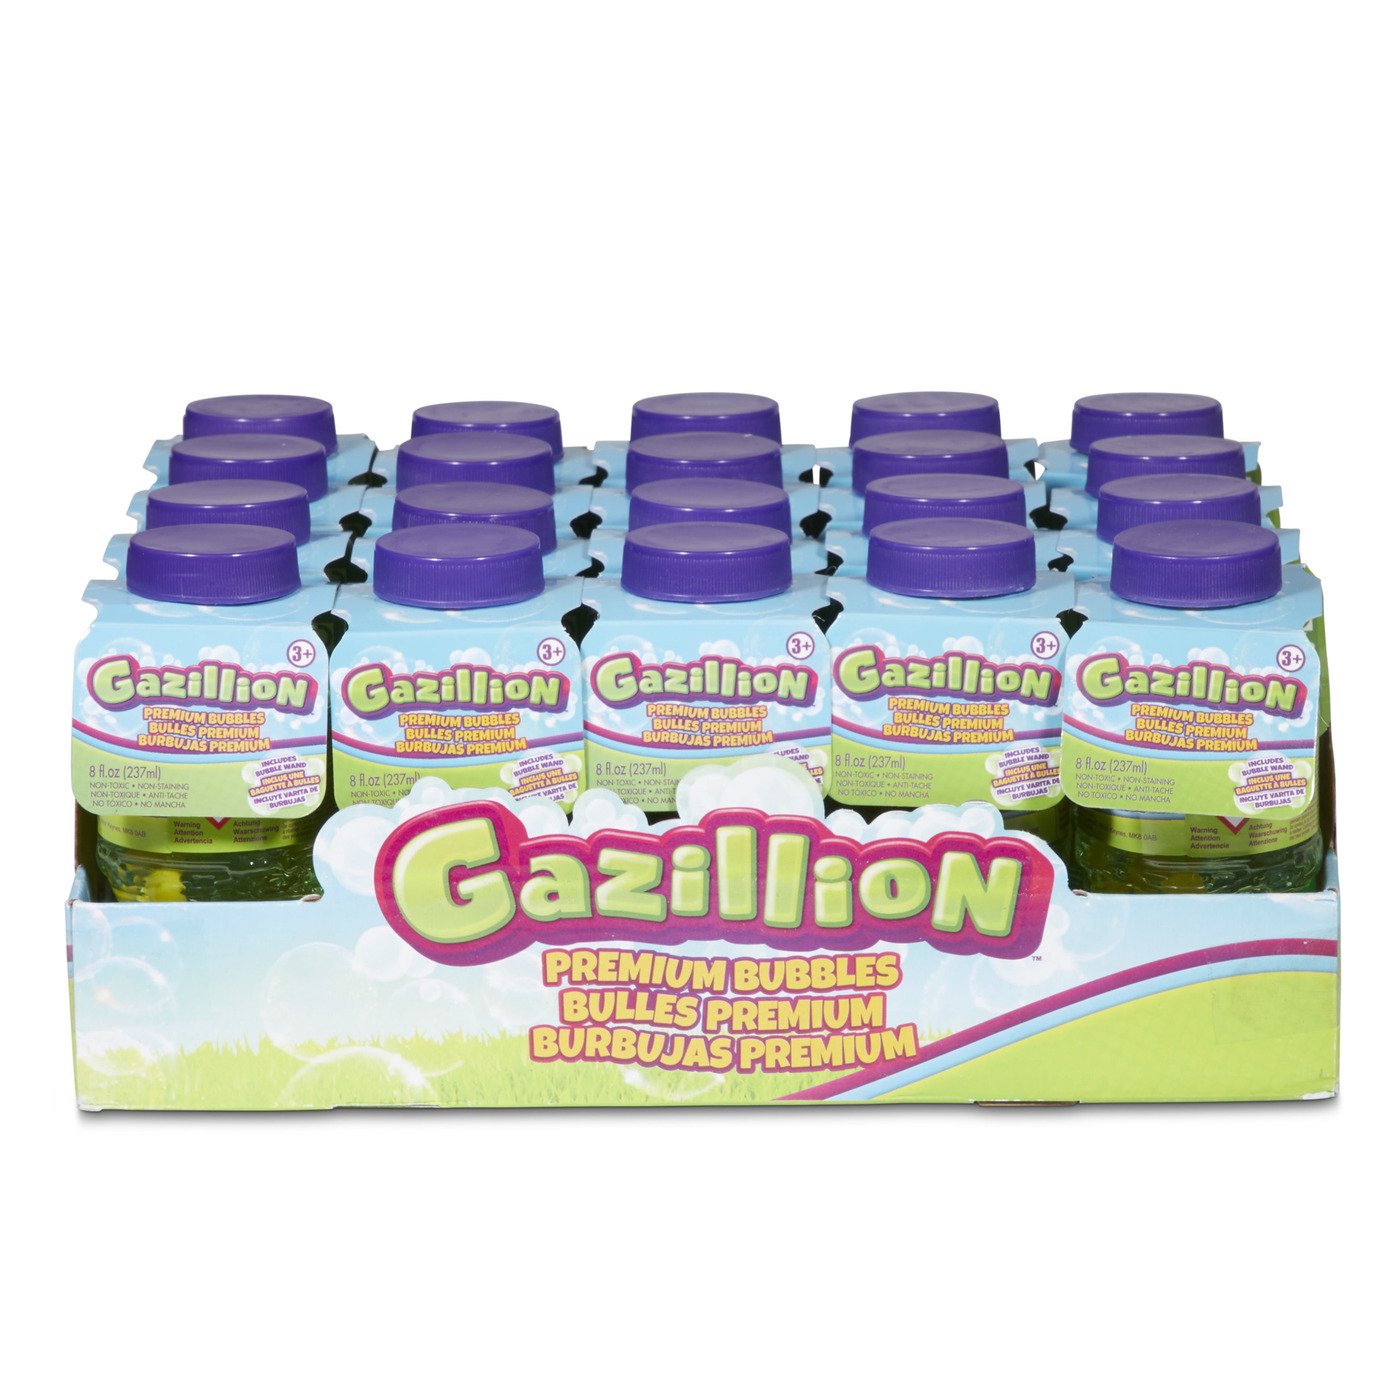 Gazillion 8oz Solution Party Pack Review